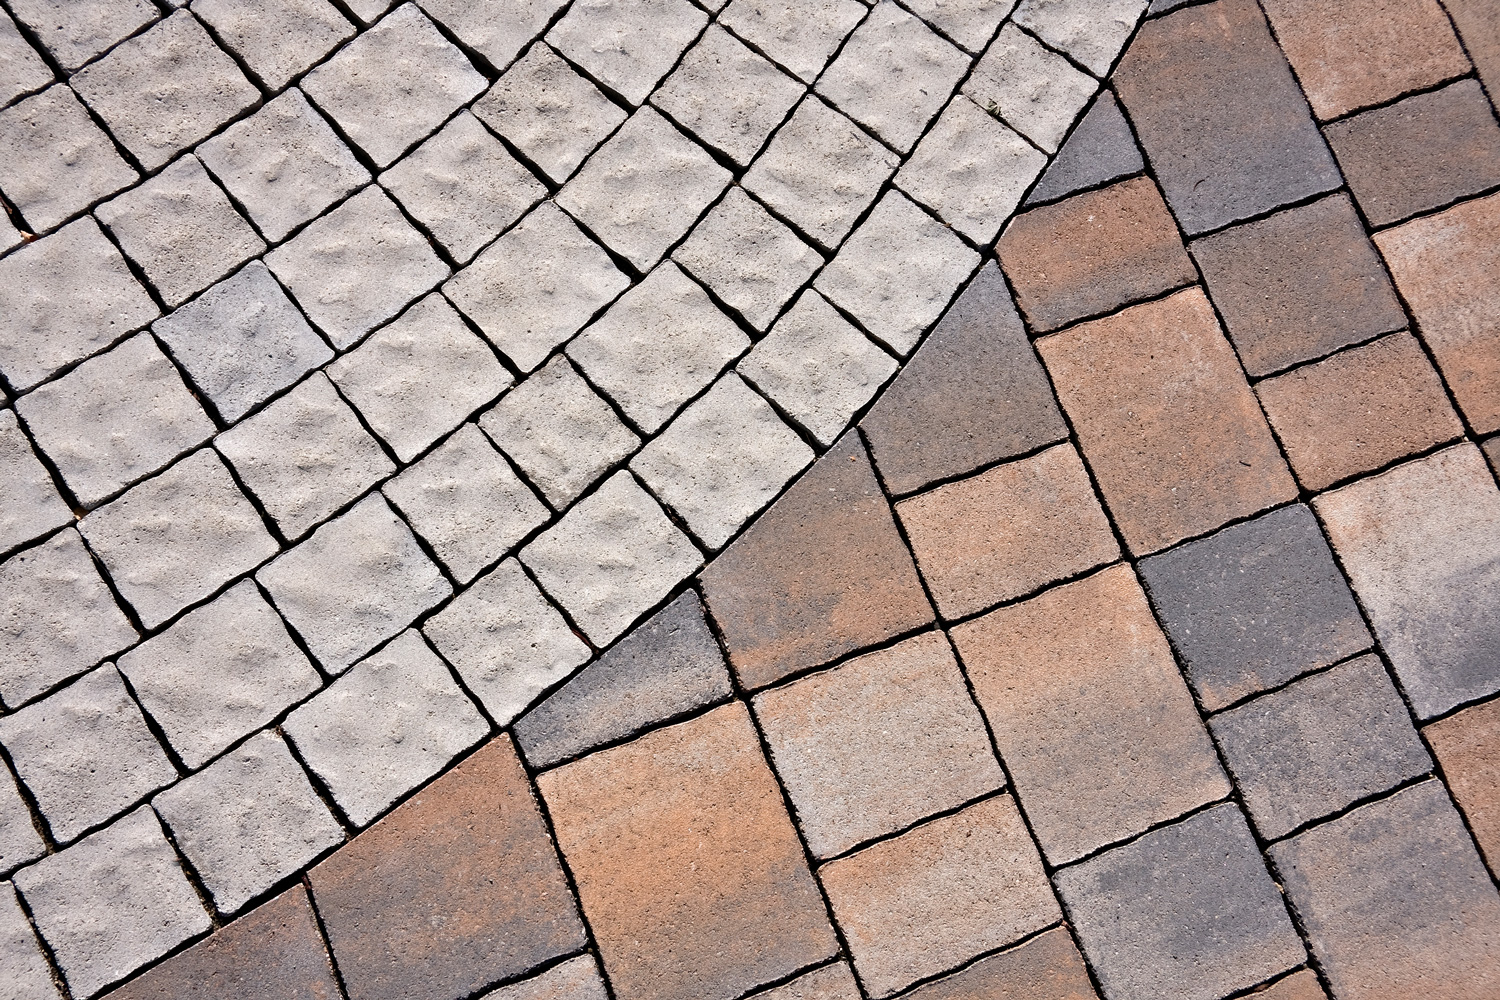 Pathway pattern of paver stones.